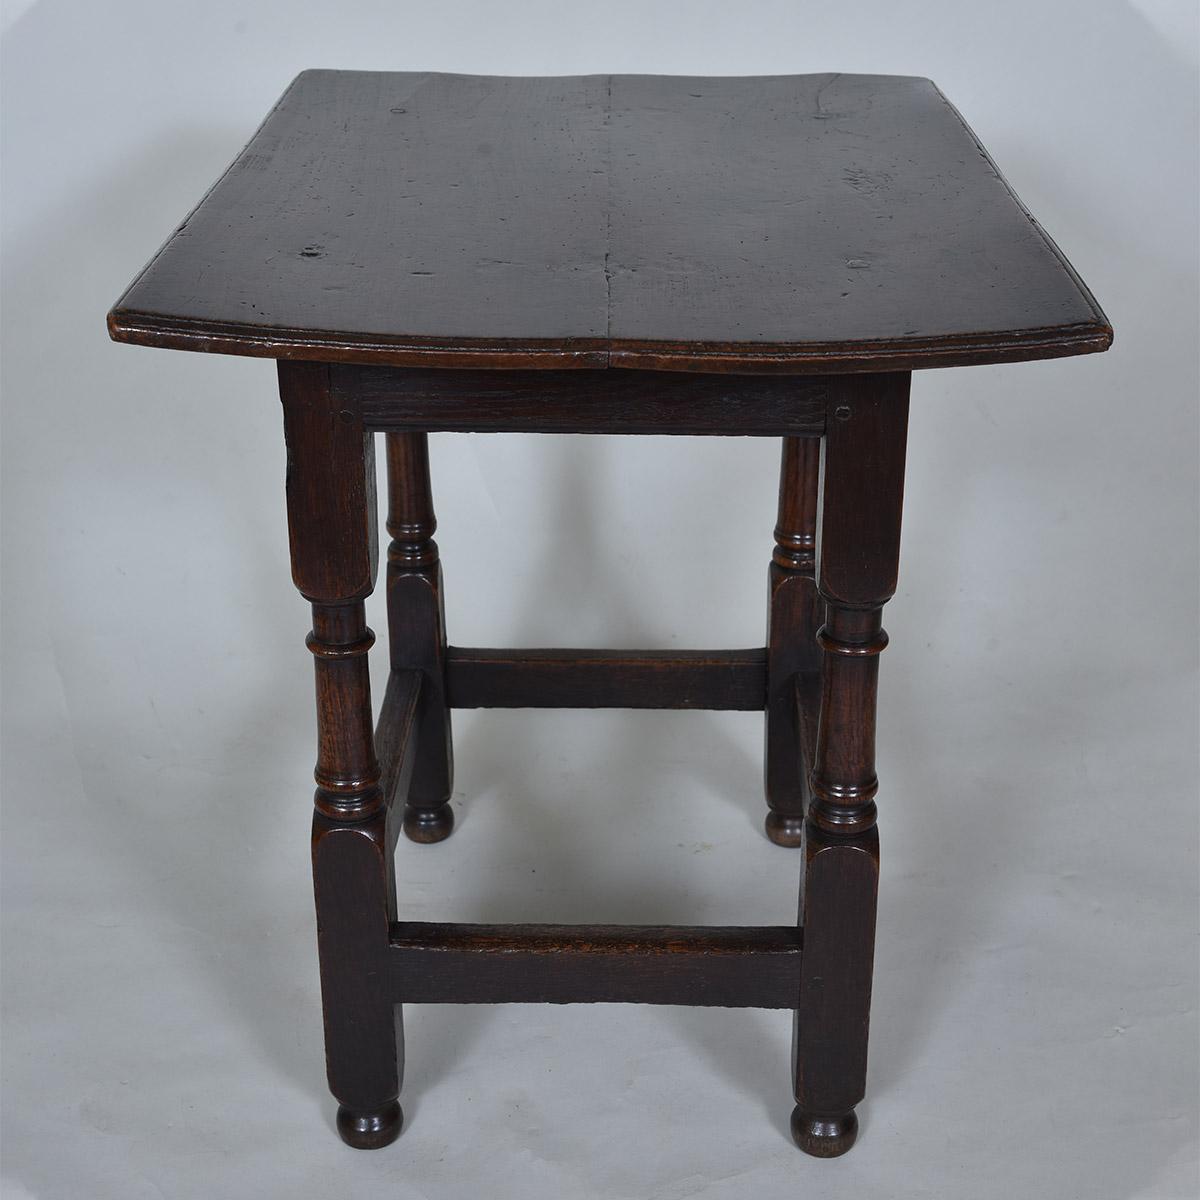 Small 17th century Oak Table